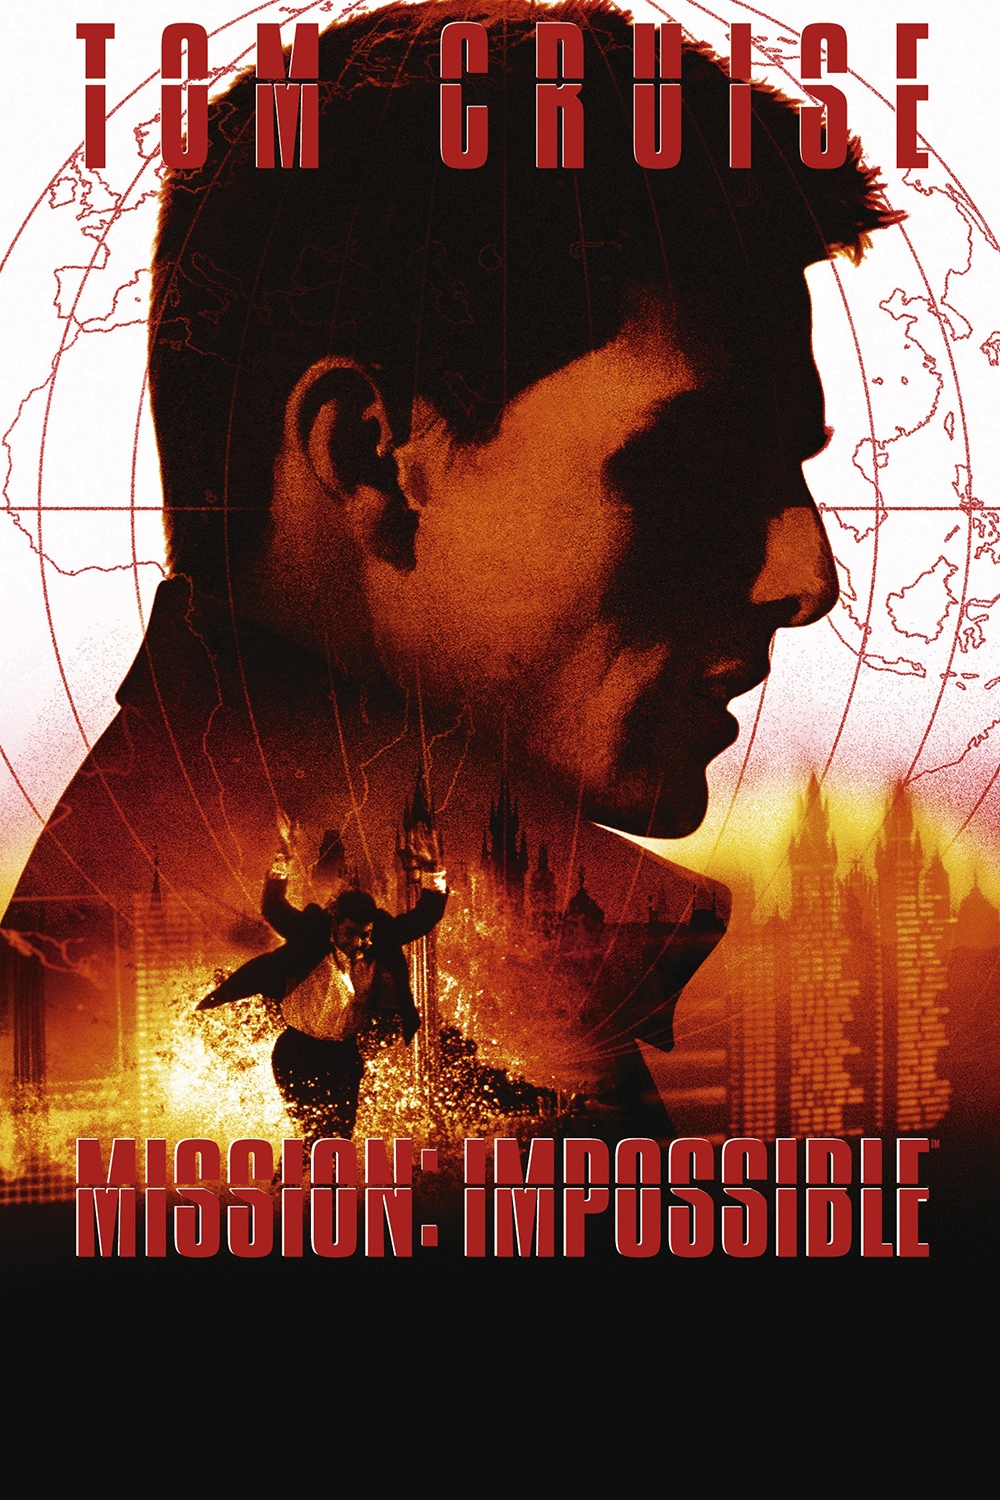 Mission: Impossible film - Wikipedia